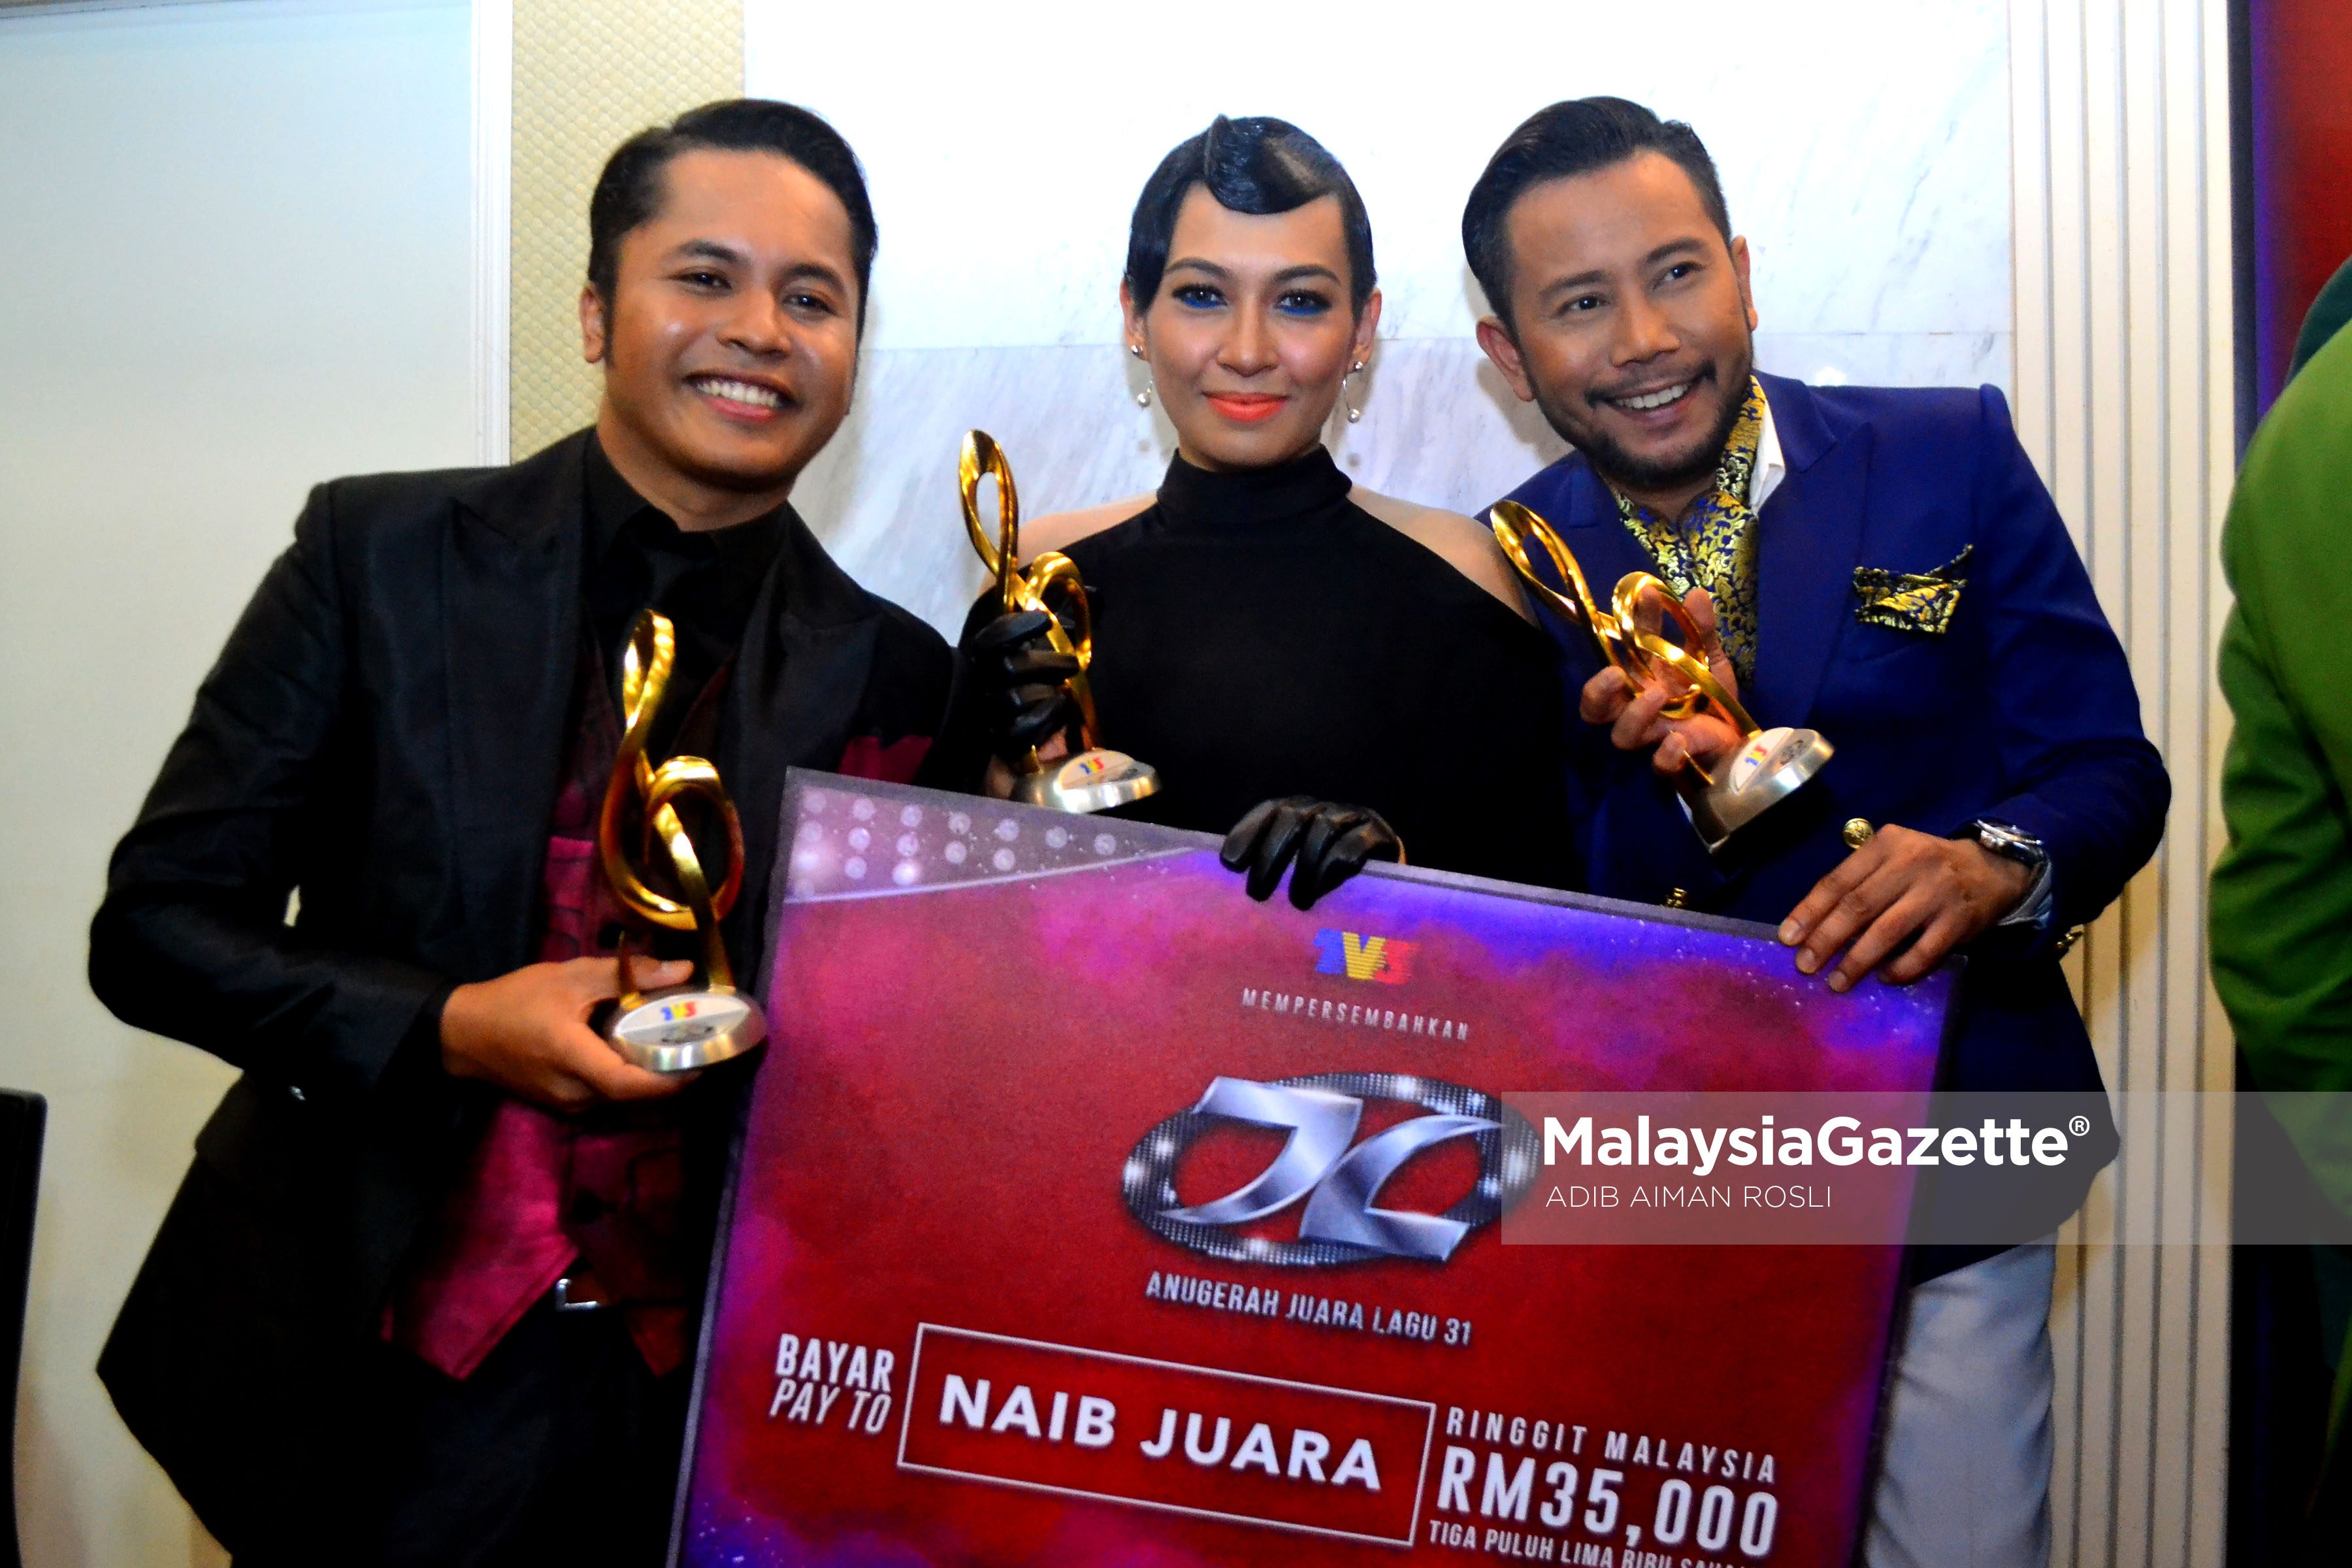 Hafiz Suip (kiri), Misha Omar (tengah) dan Ajai (kanan) dinobatkan sebagai pemenang Naib Juara pada Anugerah Juara Lagu KE 31 di Pusat Dagangan Dunia Putra (PWTC), Kuala Lumpur. foto ADIB AIMAN ROSLI, 22 JANARI 2017